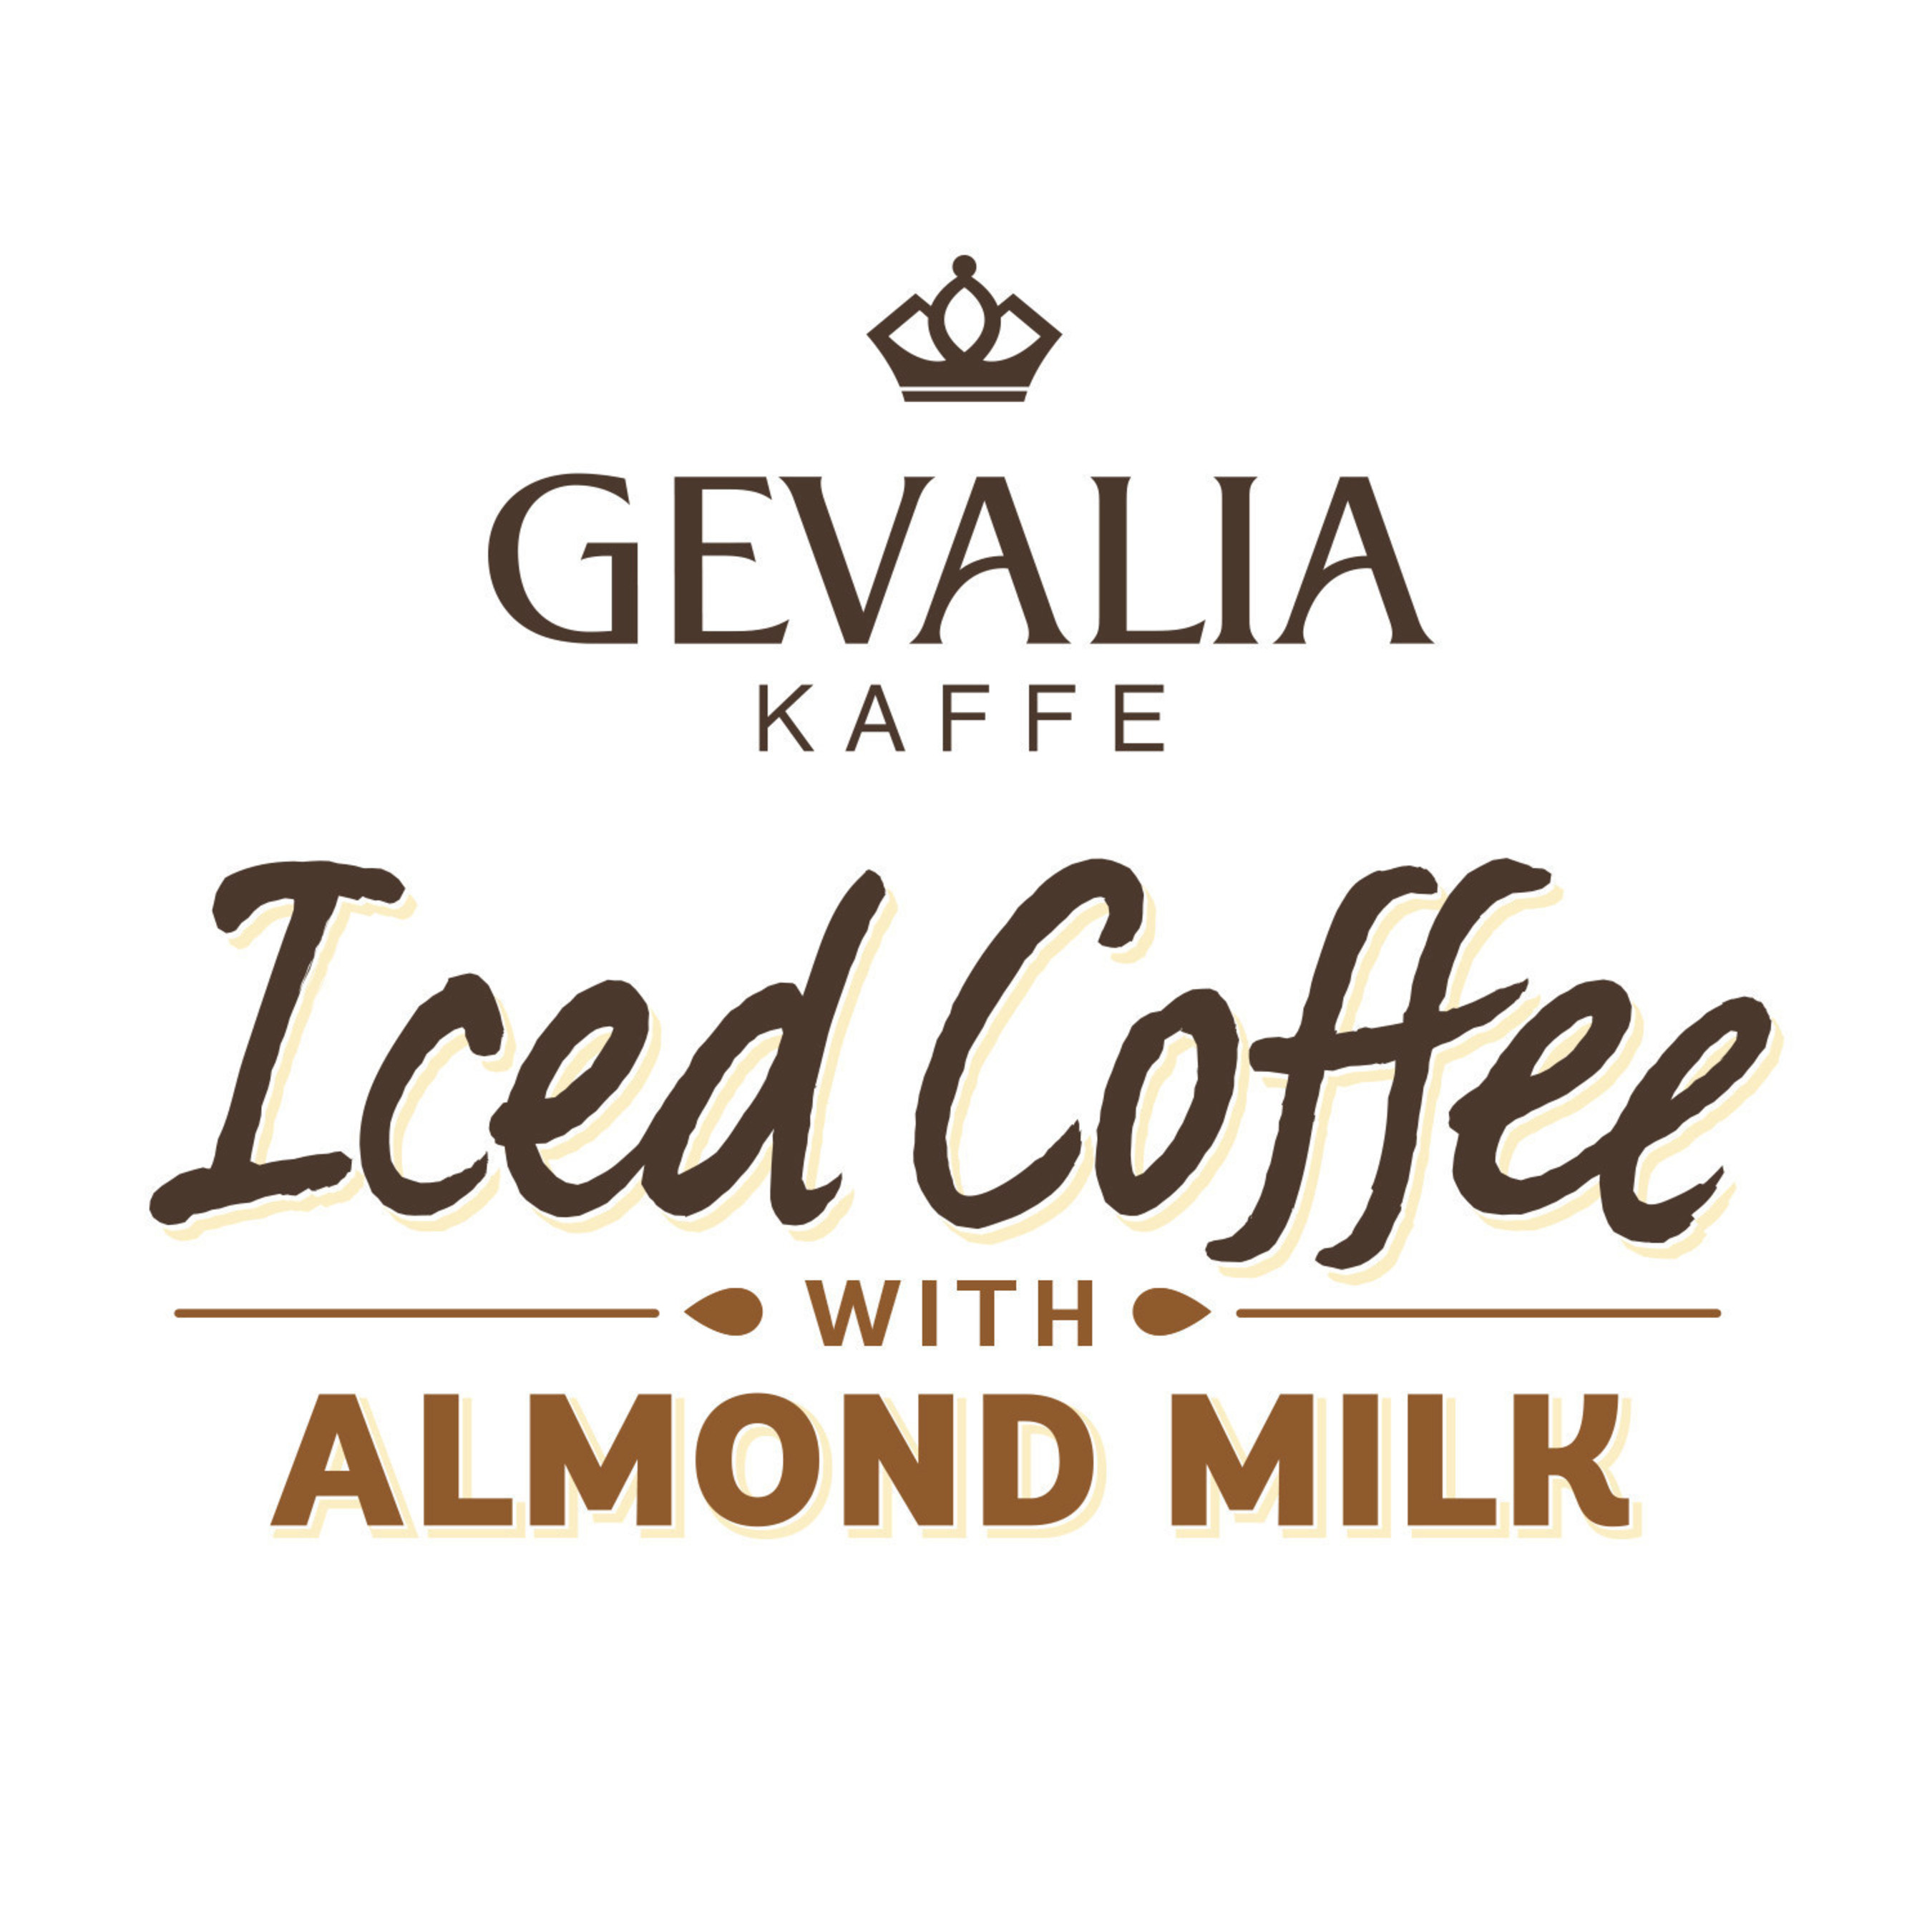 Gevalia Introduces a new, delightful twist on Iced Coffee